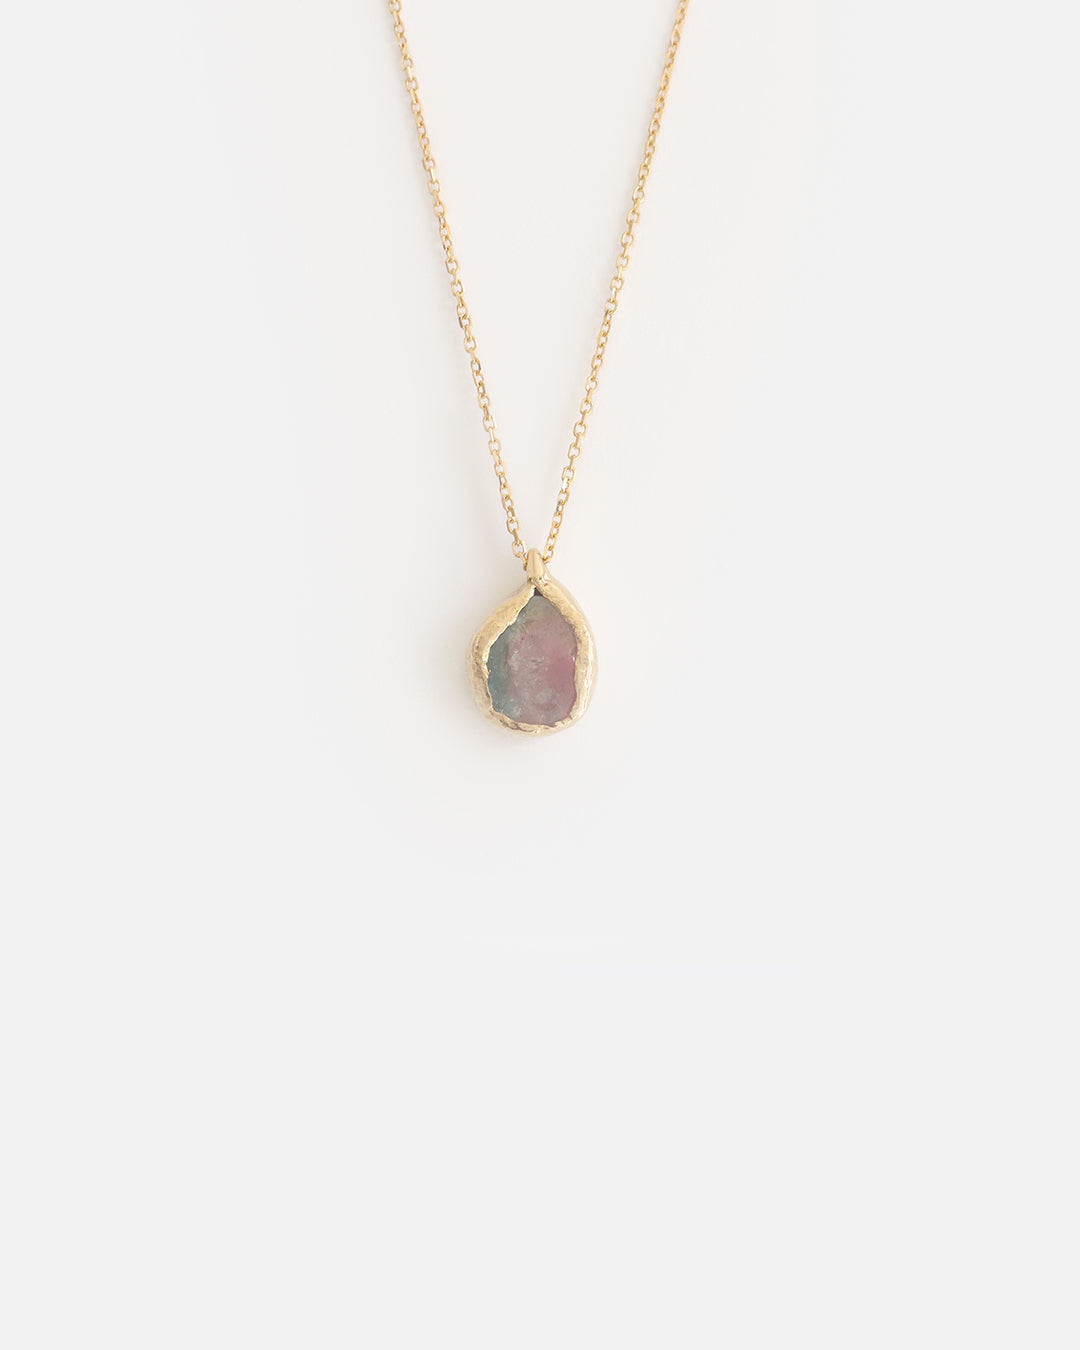 Watermelon Tourmaline / Drop Necklace By Ariko in pendants Category